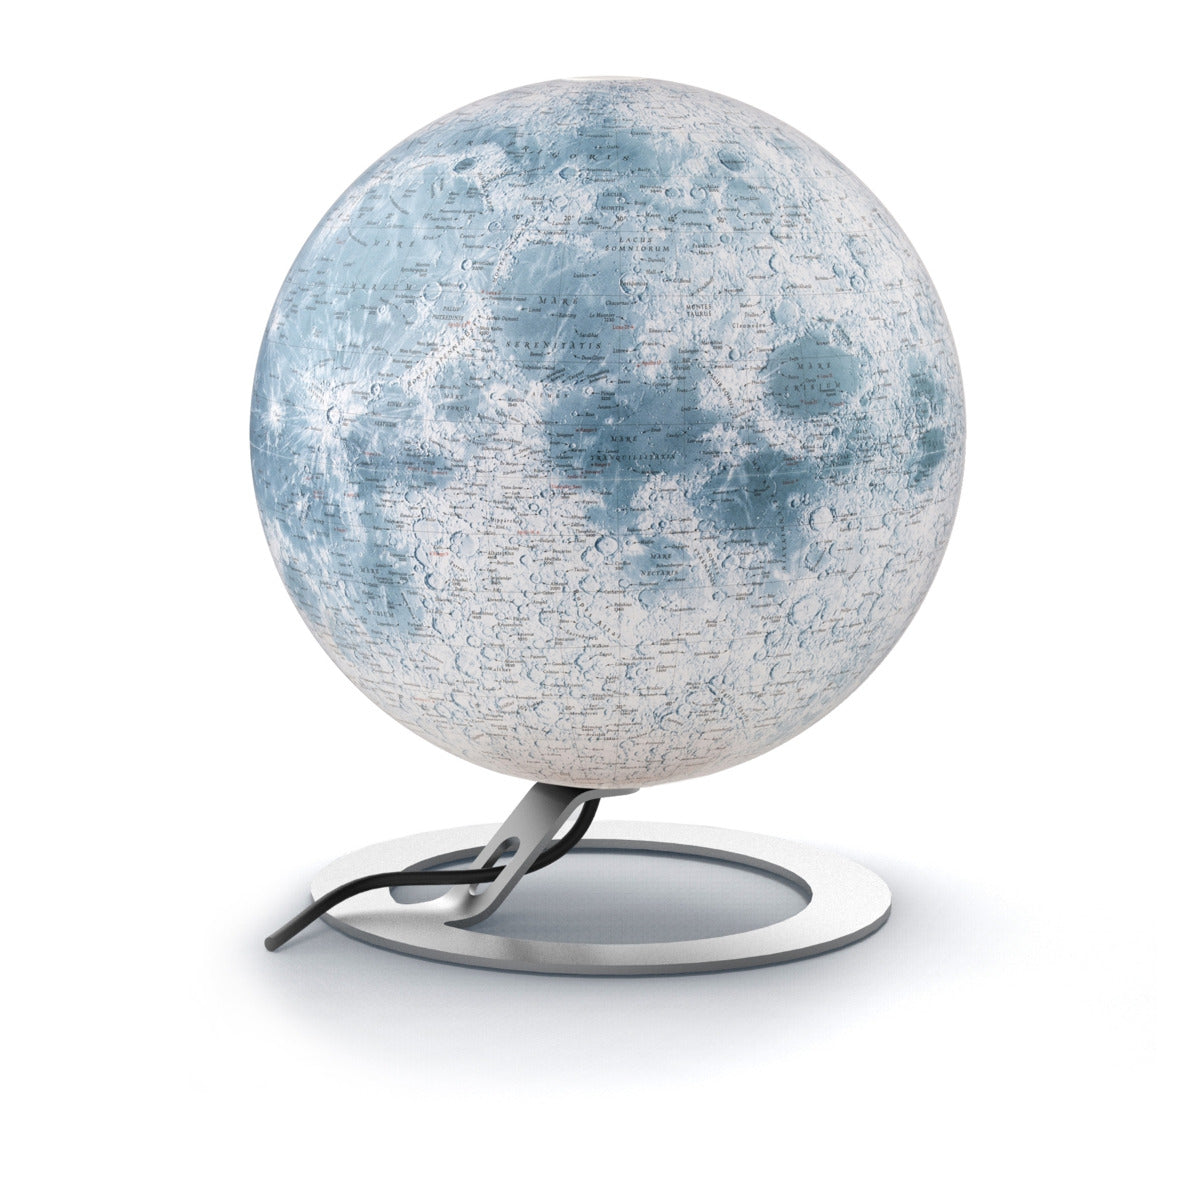 The Moon / Der Mond  -  Räth Globus